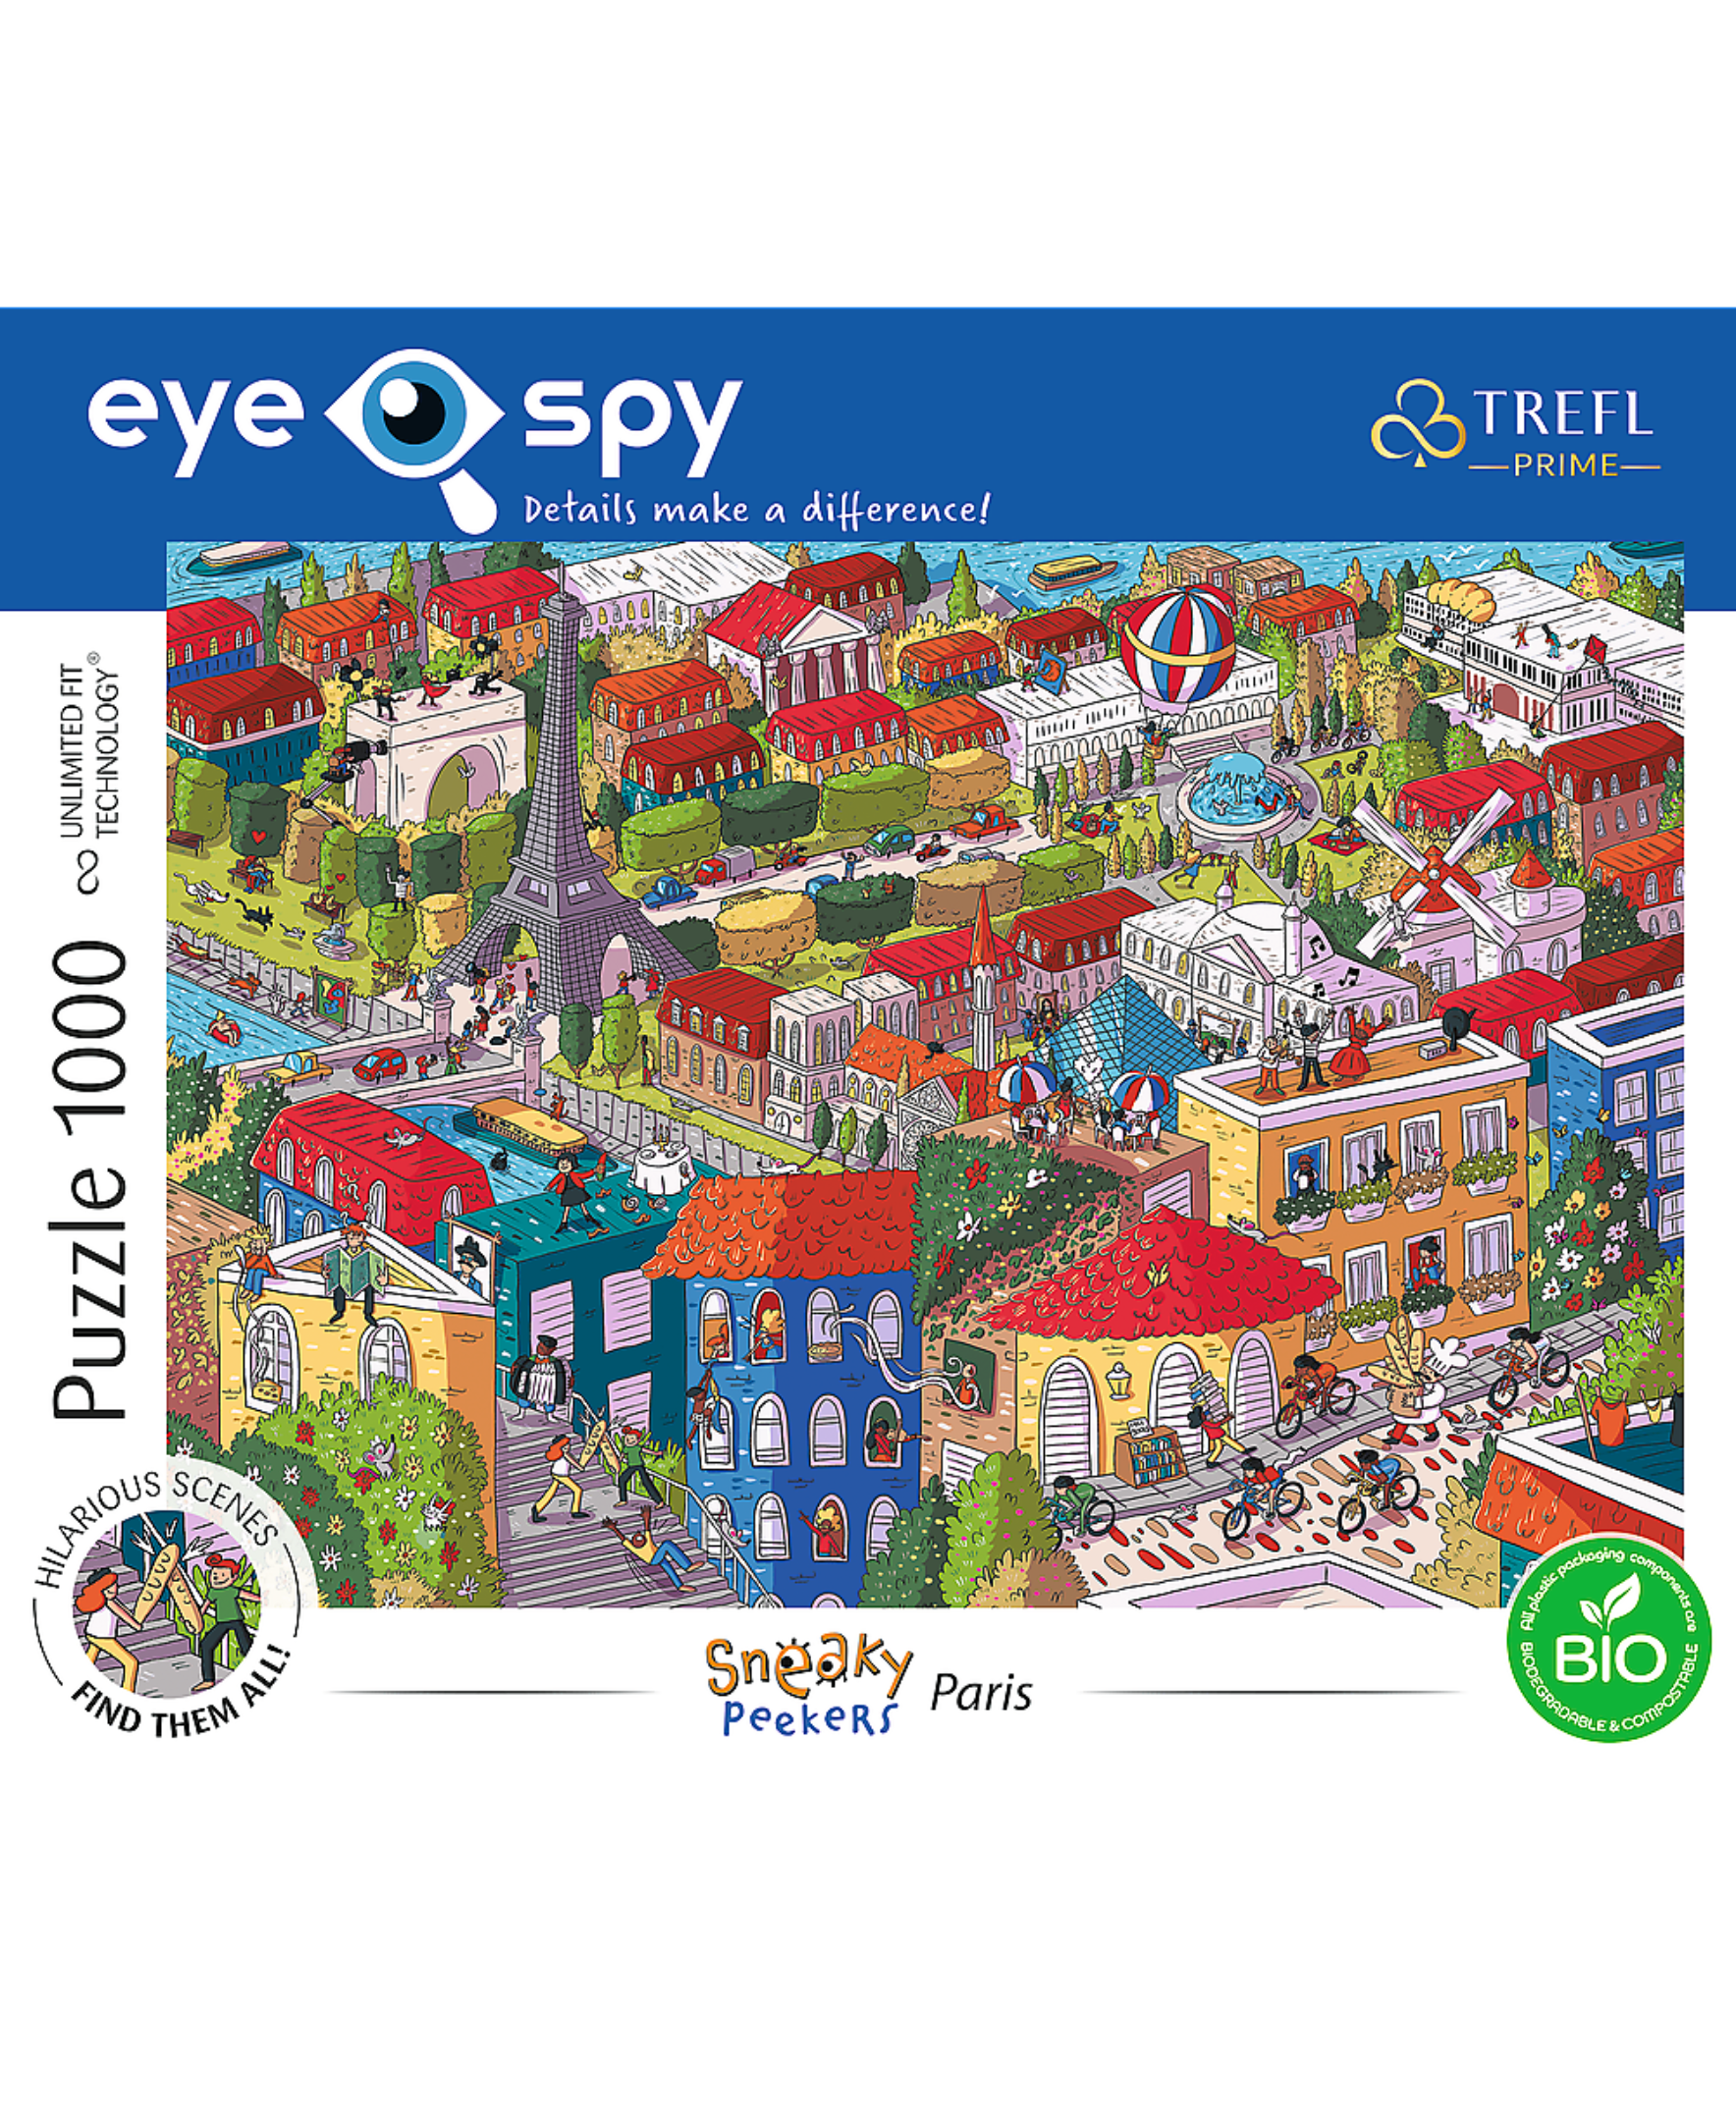 Trefl Prime Eye Spy 1000 Piece Puzzle - Sneaky Peakers: Paris